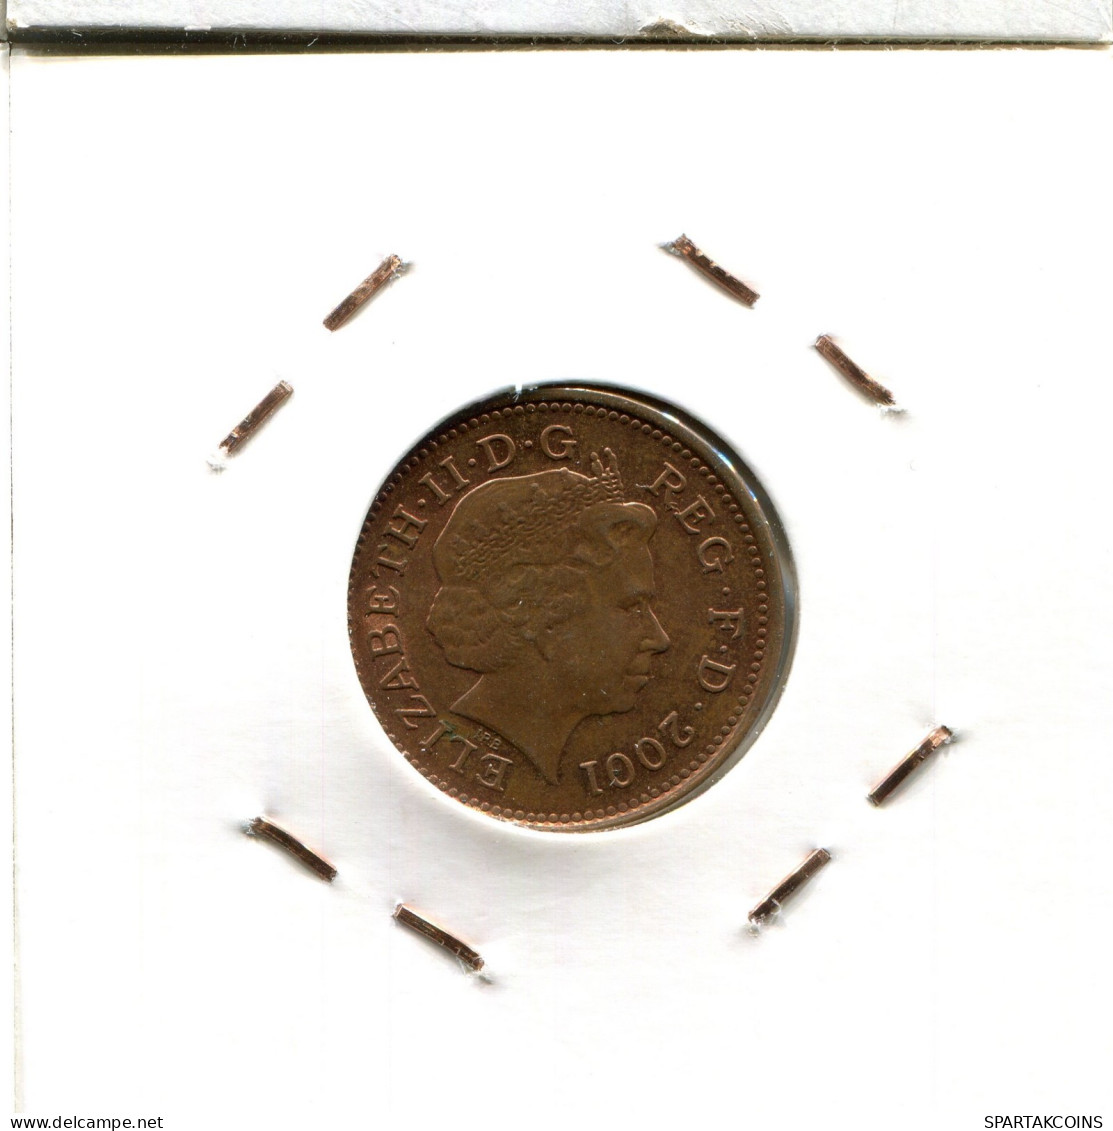 2001 PENNY UK GBAN BRETAÑA GREAT BRITAIN Moneda #AW186.E.A - 1 Penny & 1 New Penny